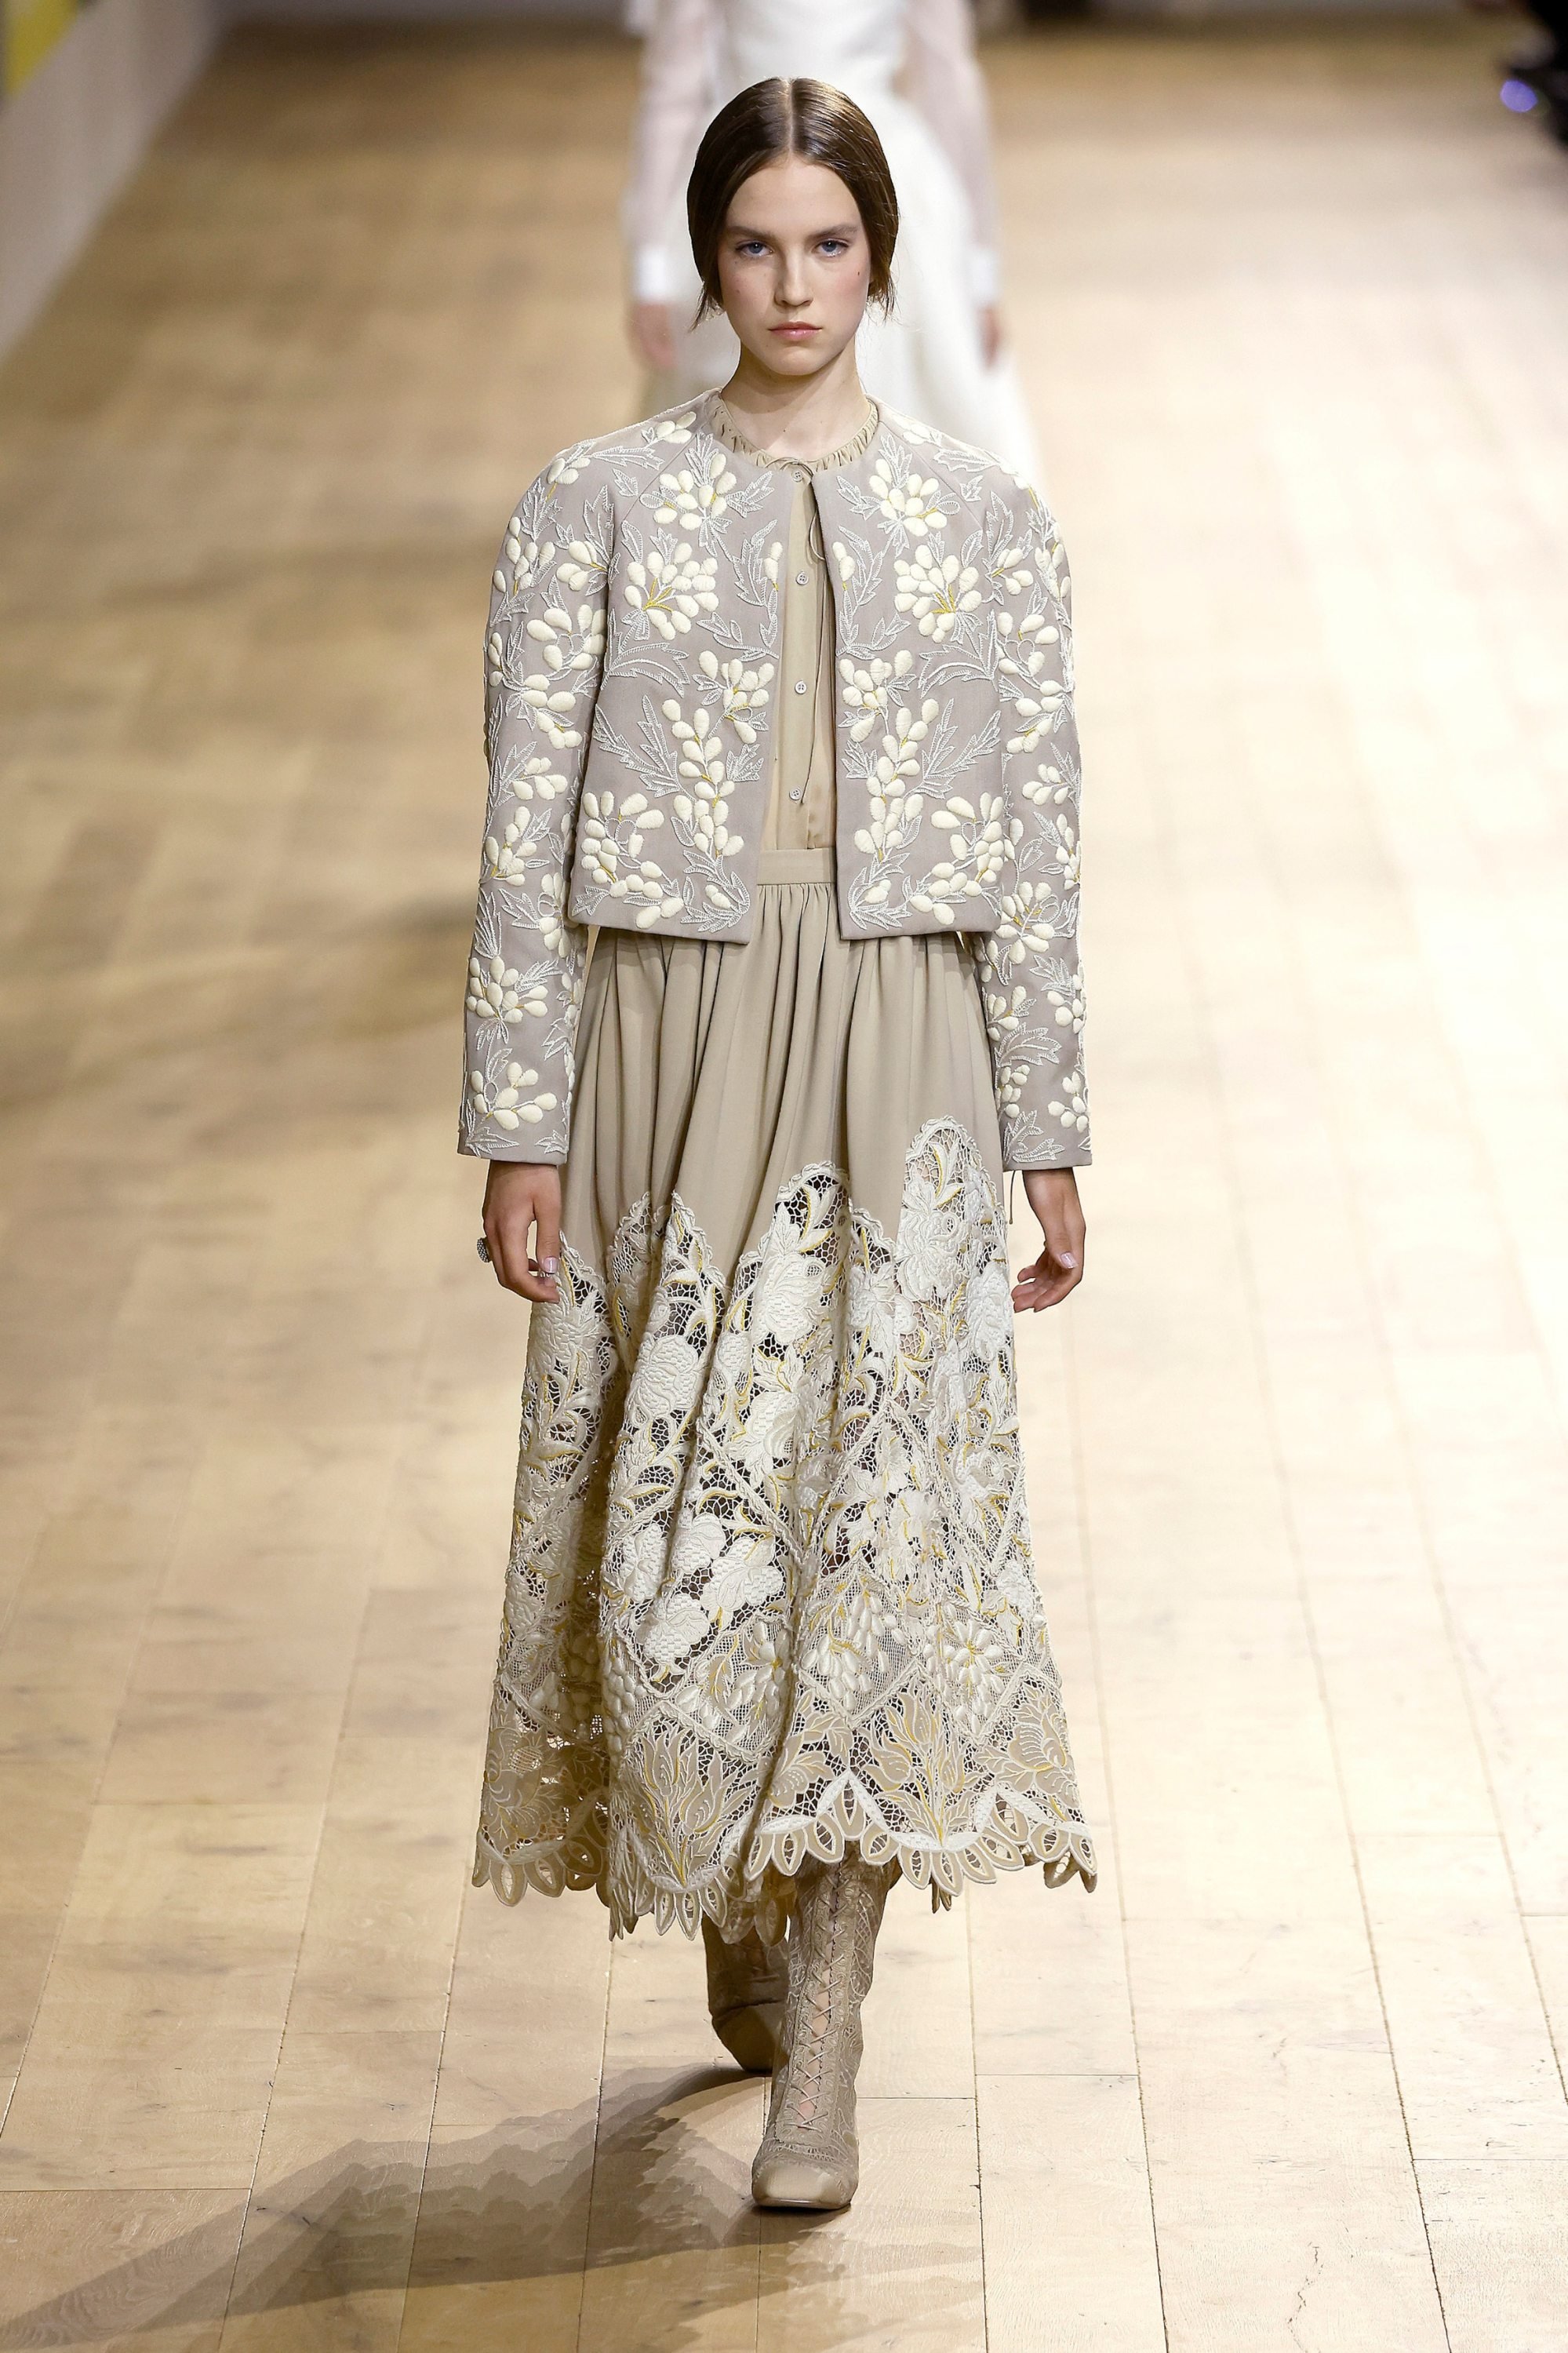 Creations of Christian Dior presented during Paris Fashion Week - Xinhua